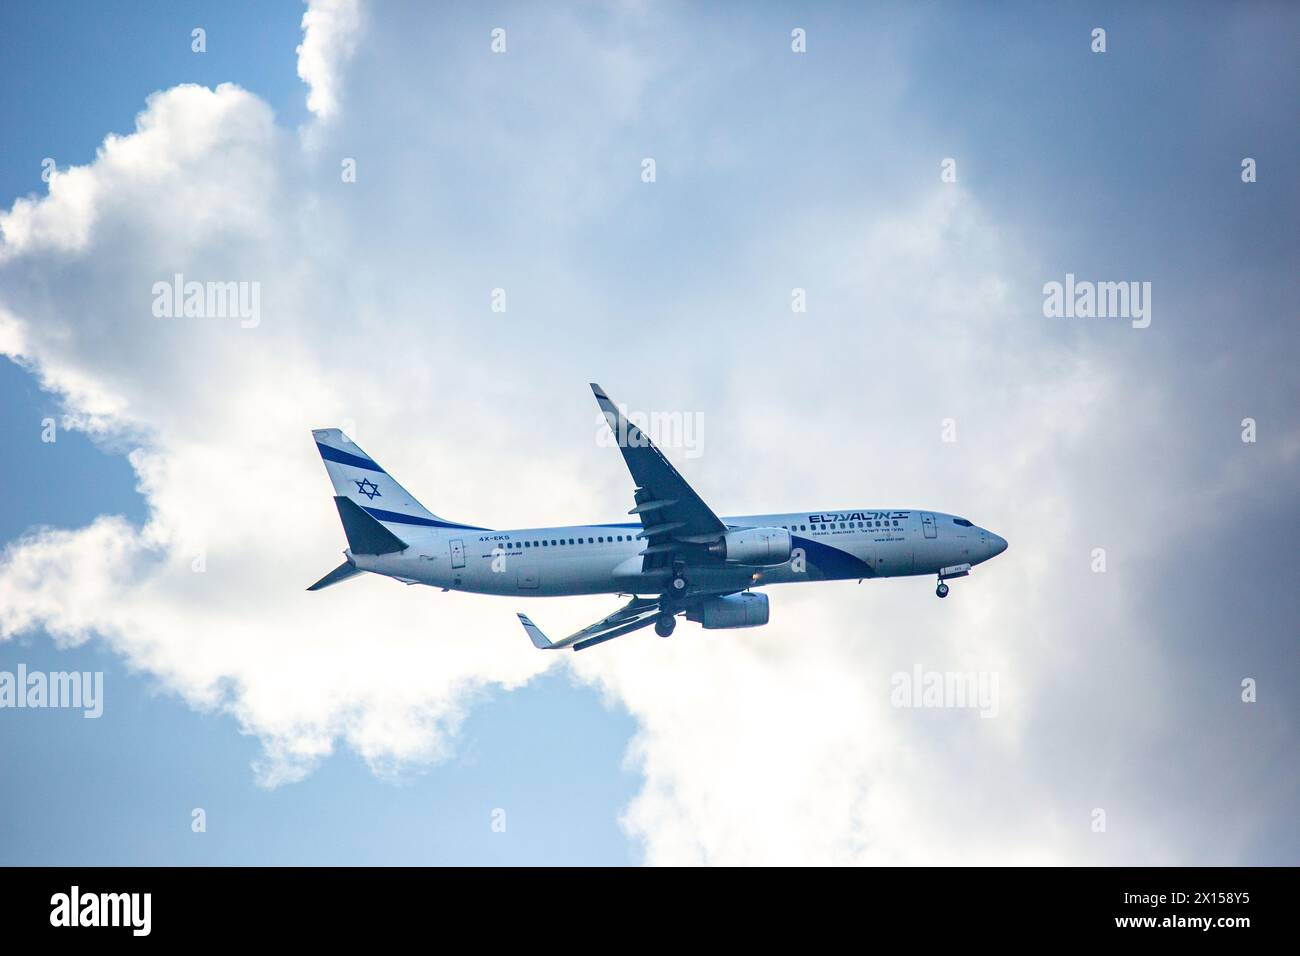 Boeing plane  737 on an El Al airline flight Stock Photo